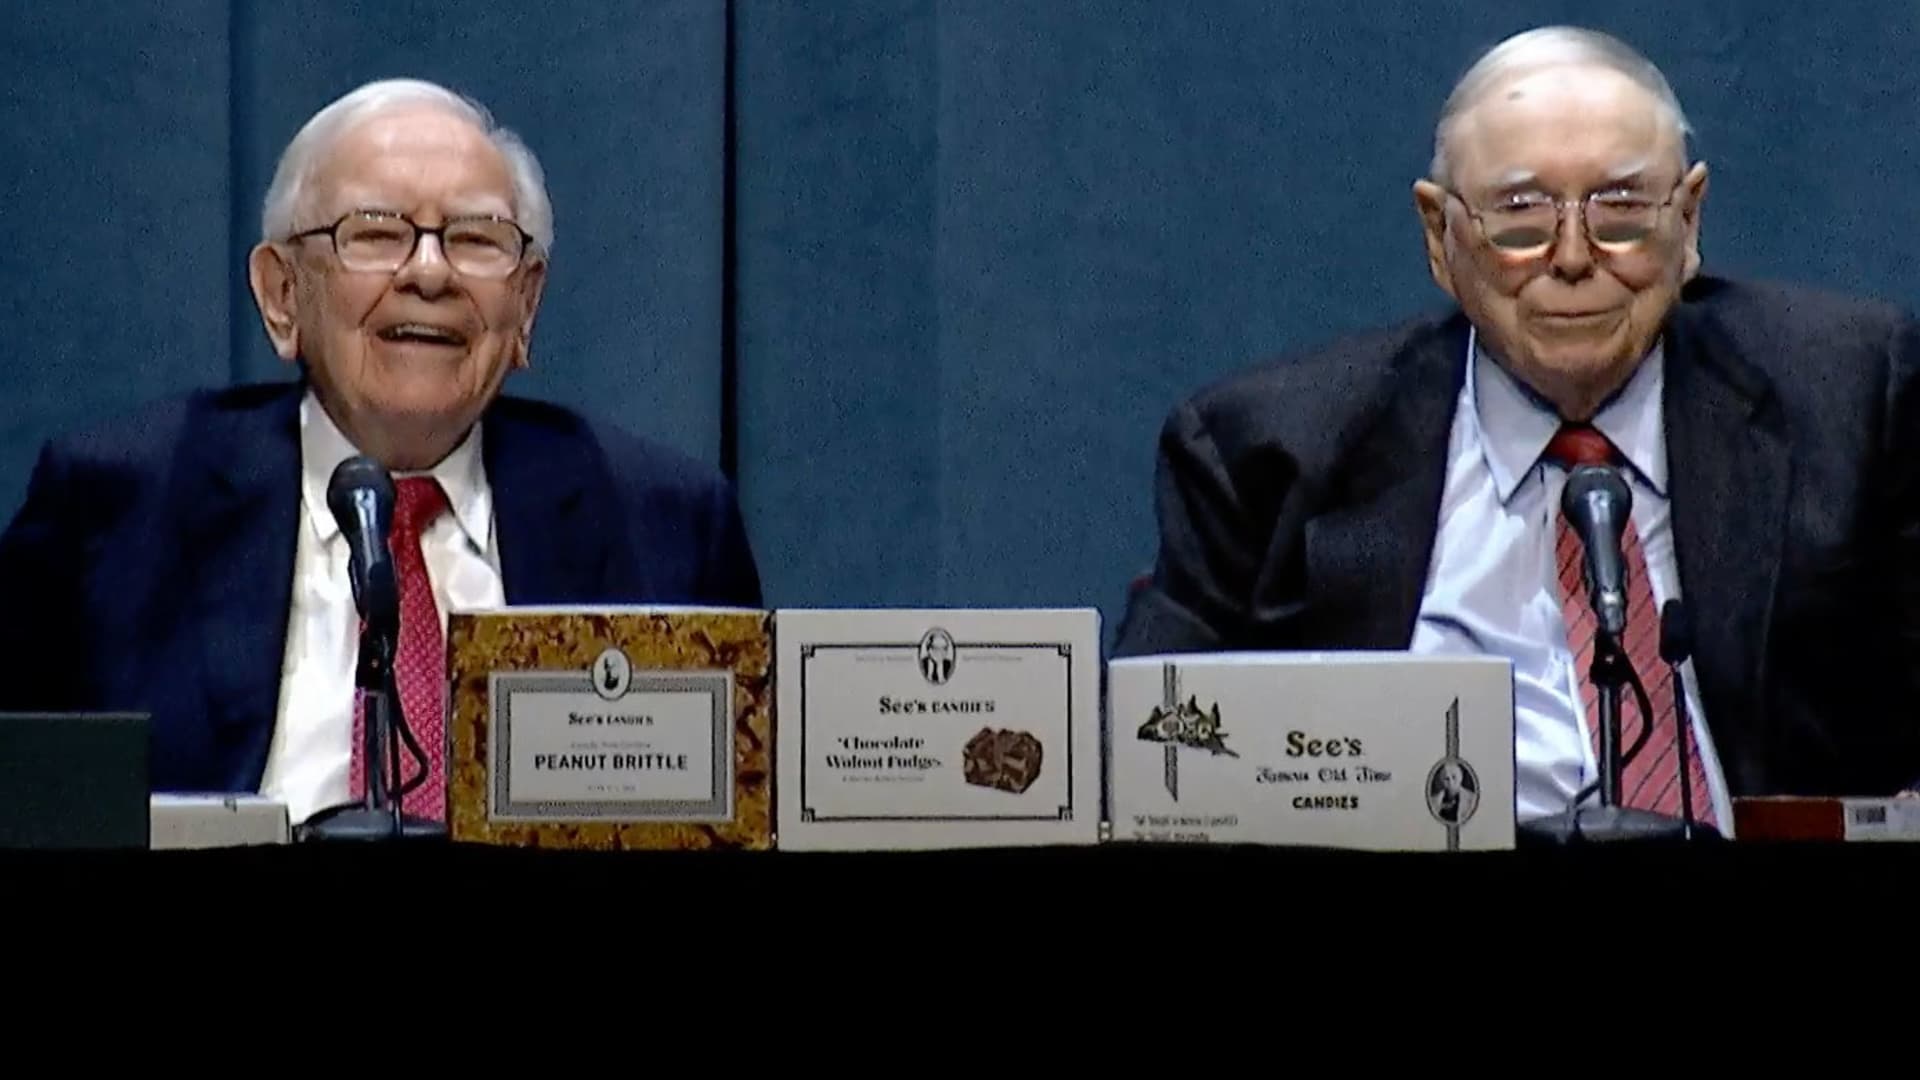 The life advice that Charlie Munger gave Warren Buffett: Live life backwards